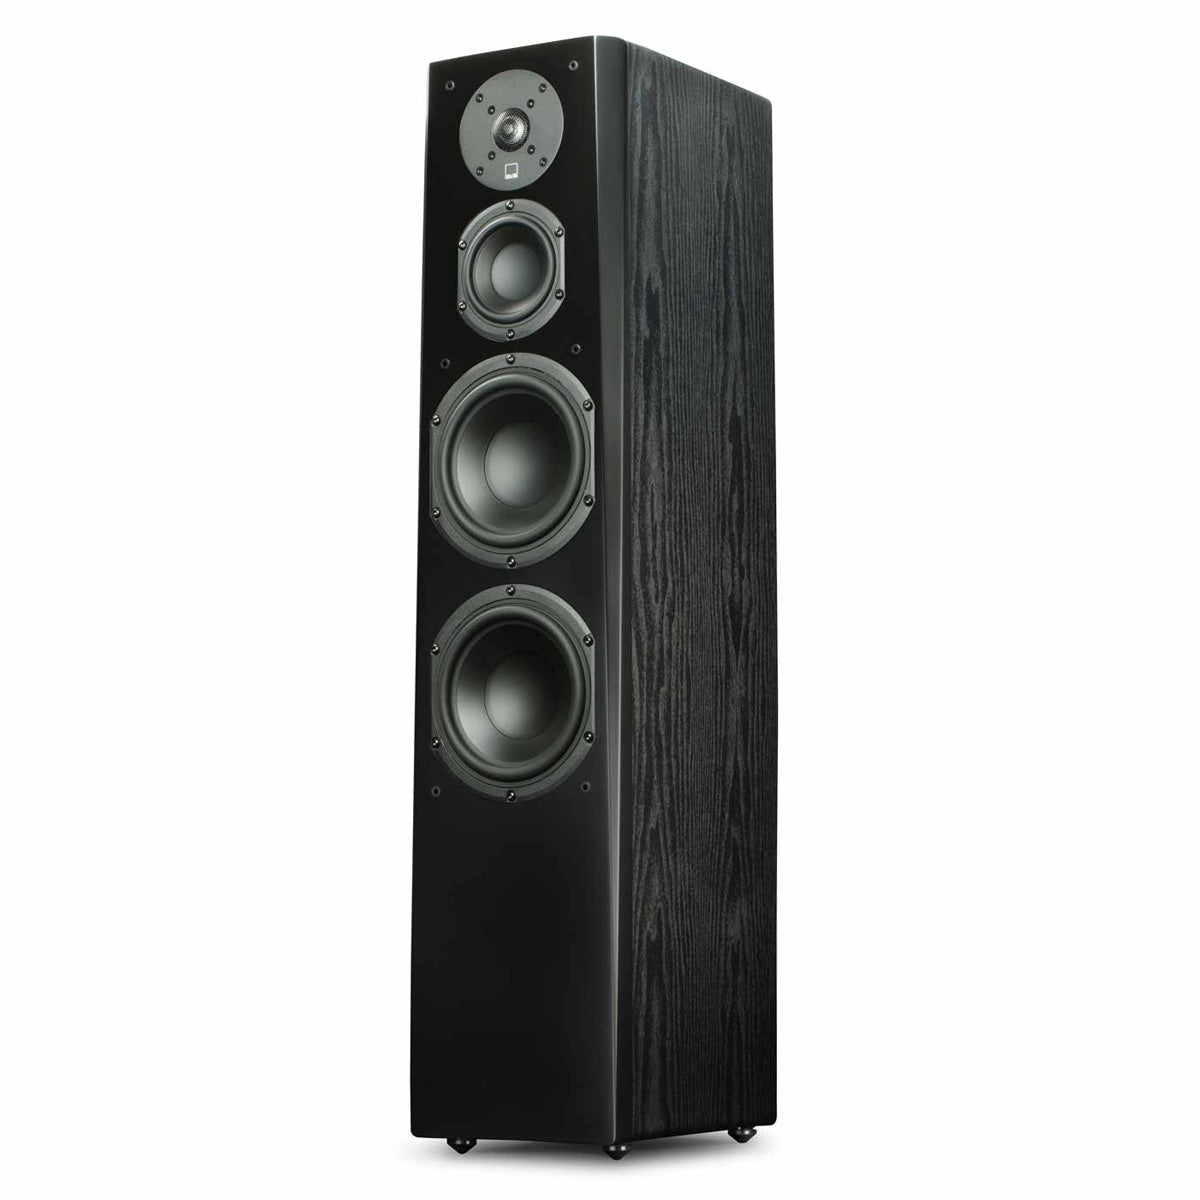 SVS Prime Tower 5.1 home cinema speaker system